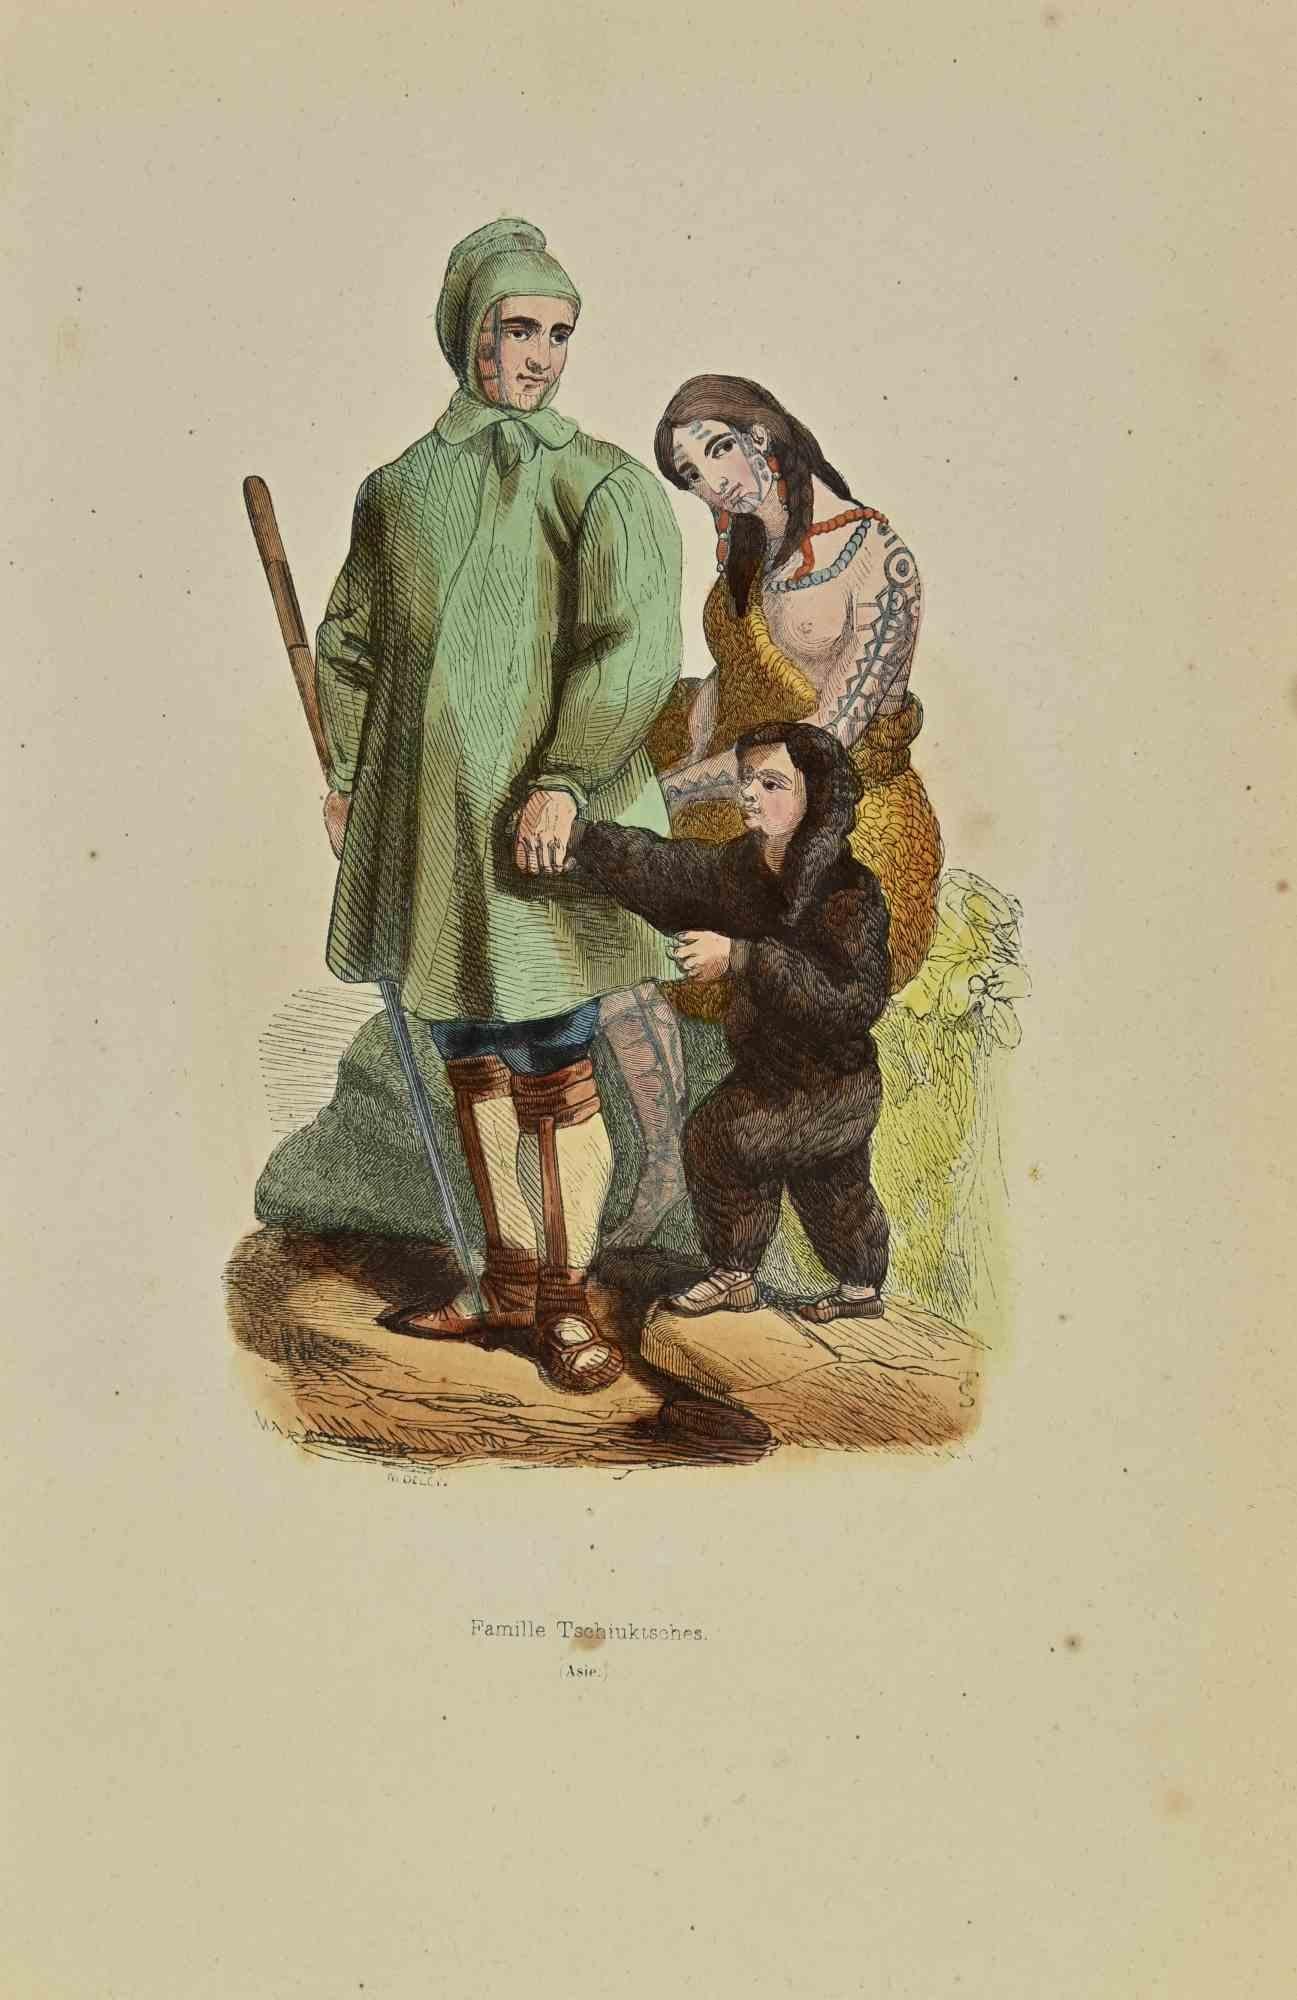 Tschiuktsches Family - Lithograph by Auguste Wahlen - 1844